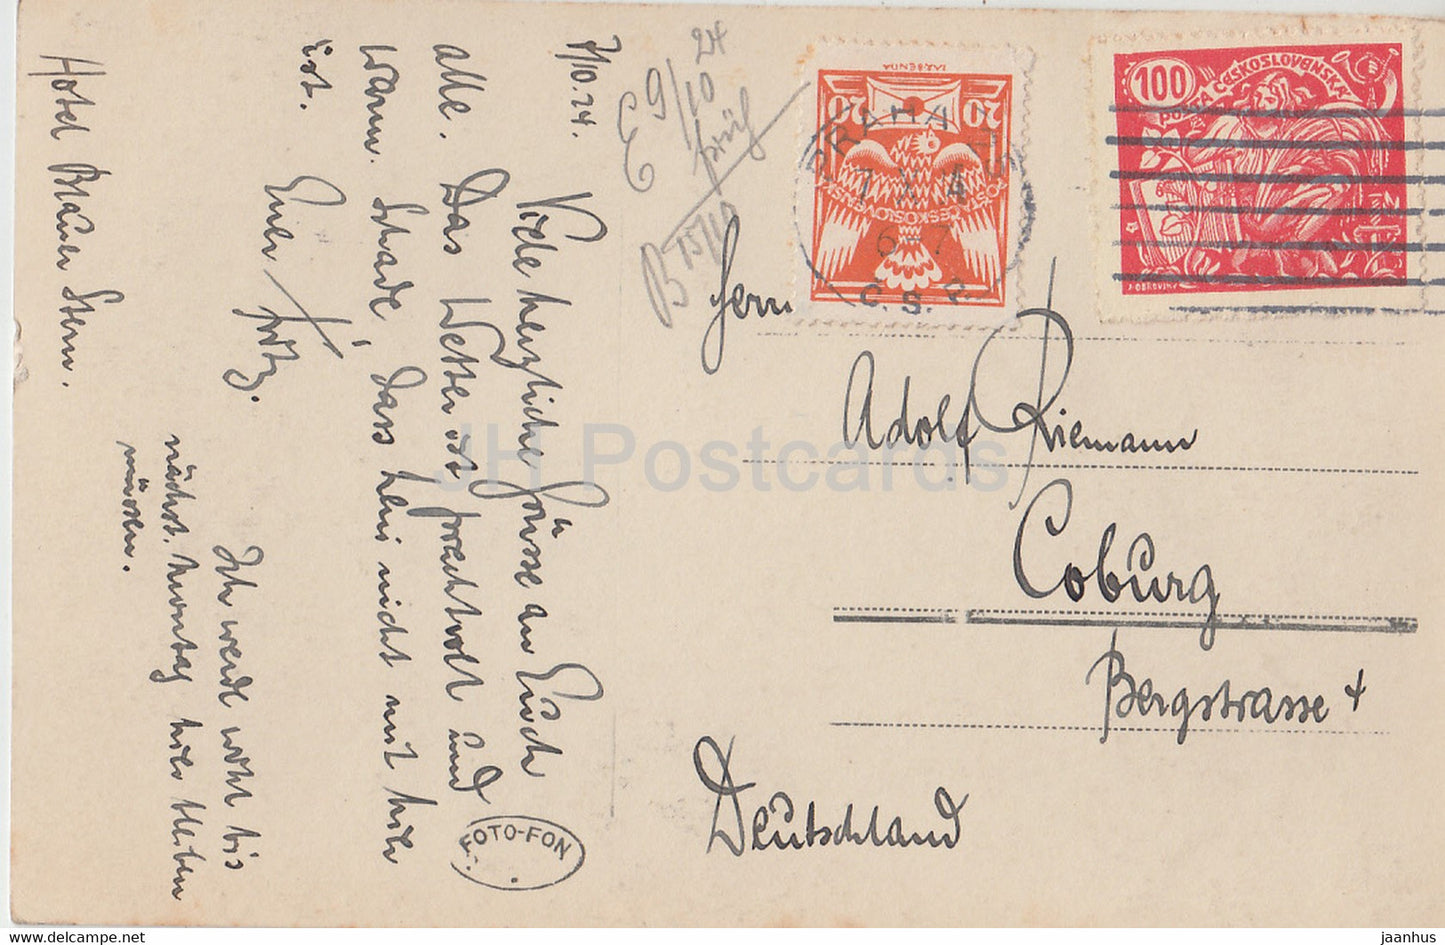 Praha - Prag - Pohled s Chotkovych sadu - 3334 - alte Postkarte - Tschechische Republik - Tschechoslowakei - gebraucht